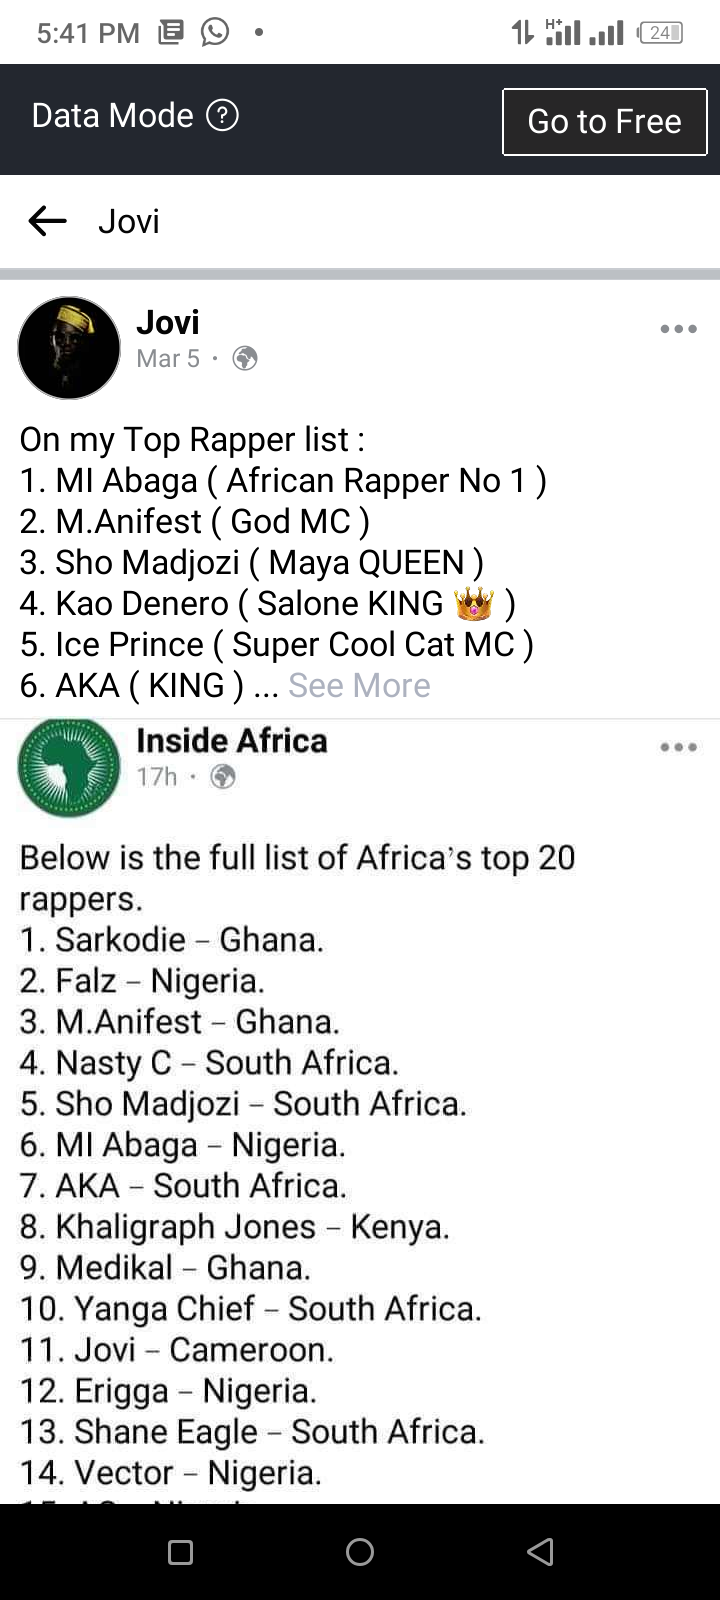 Screenshot showing Jovi list and Inside Africa list